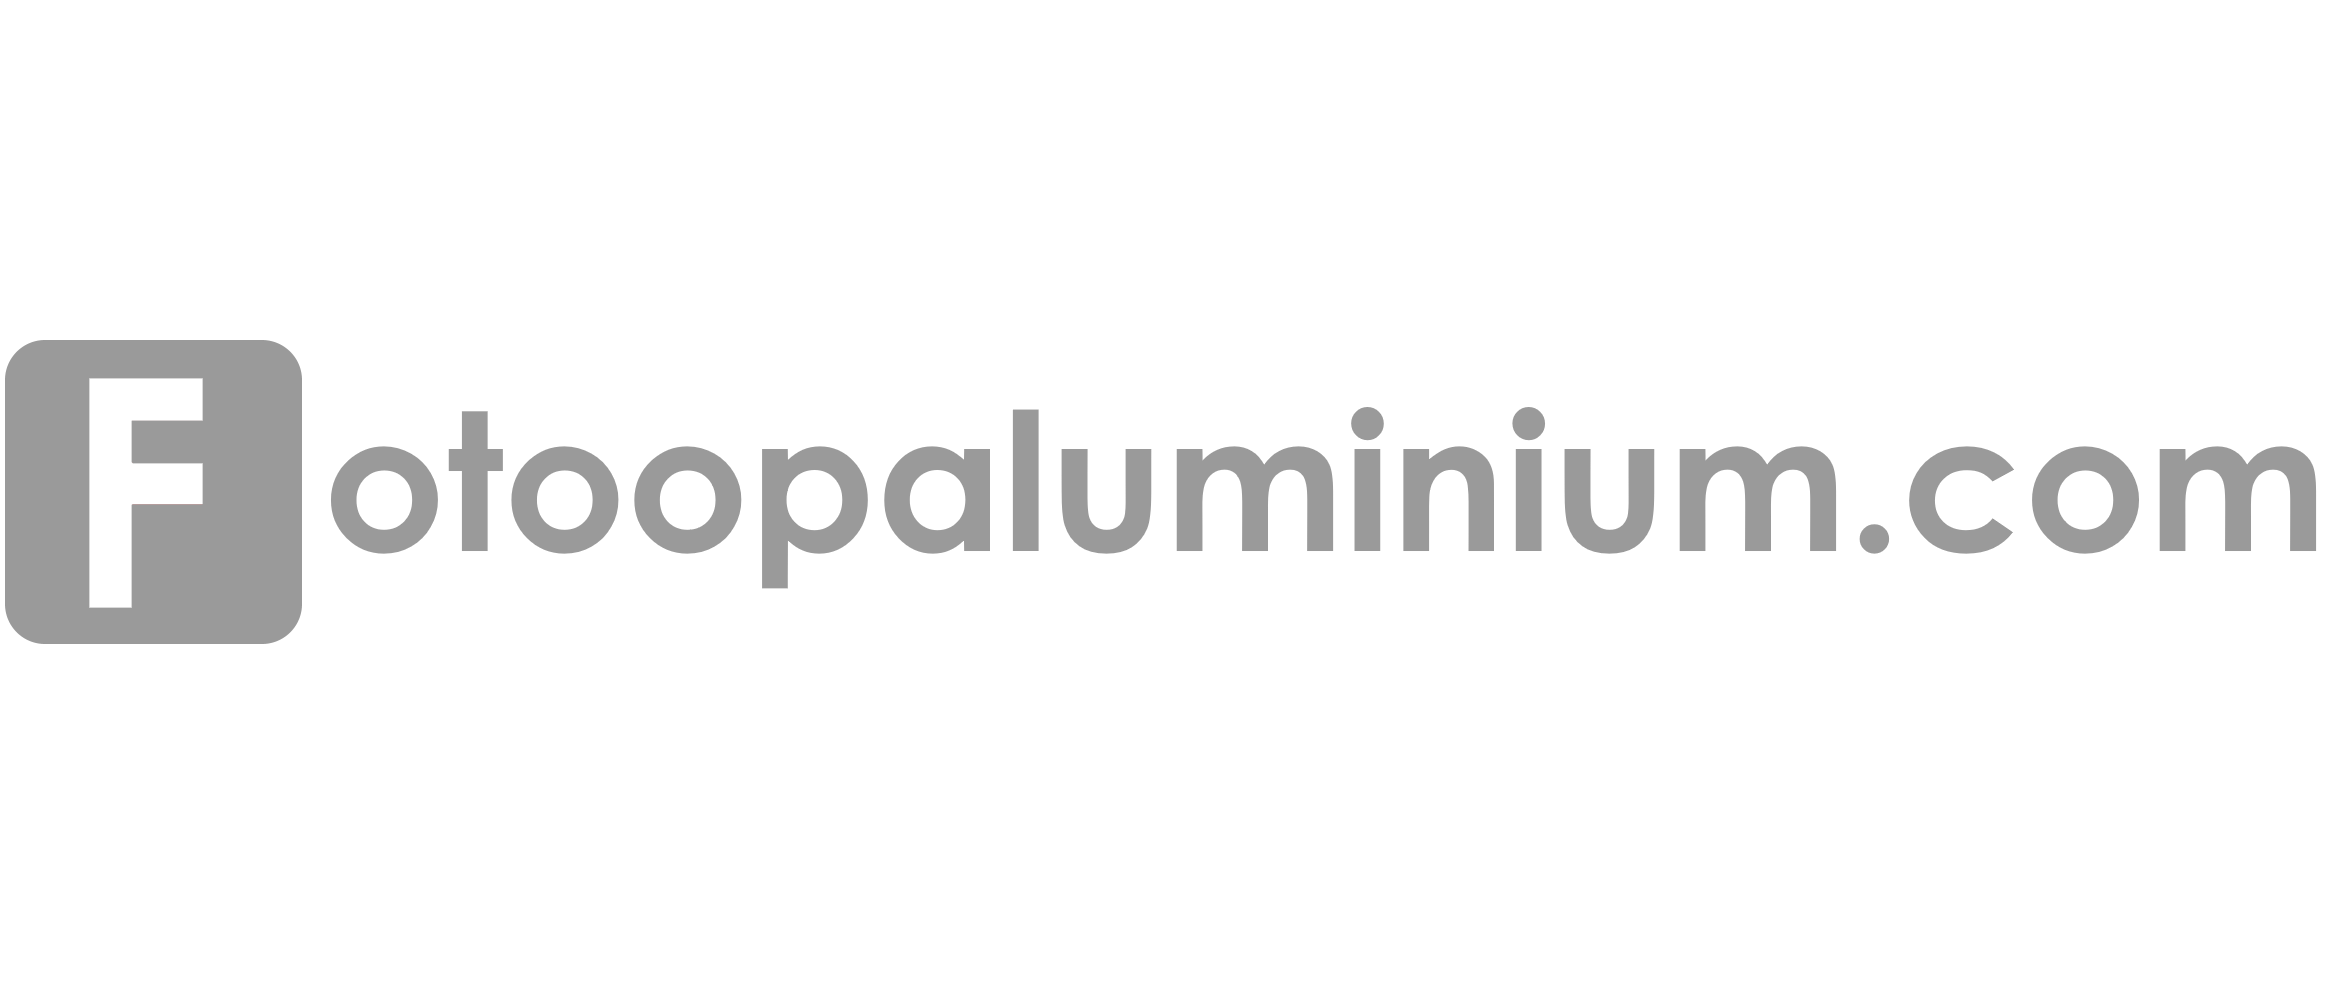 Fotoopaluminium.com